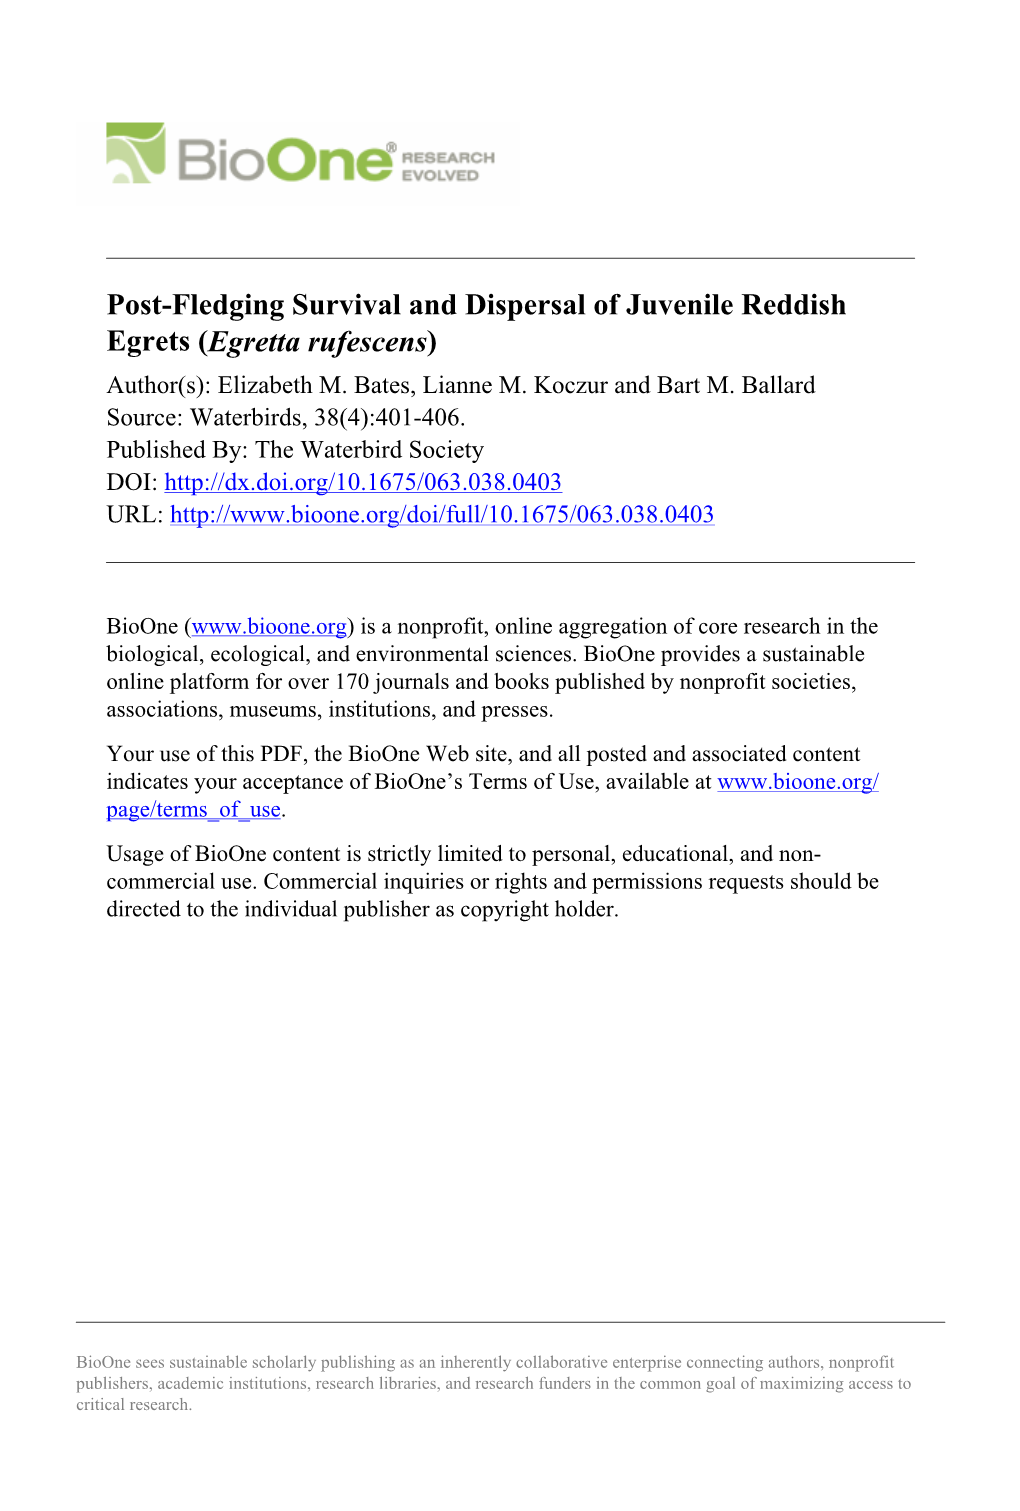 Post-Fledging Survival and Dispersal of Juvenile Reddish Egrets (Egretta Rufescens) Author(S): Elizabeth M